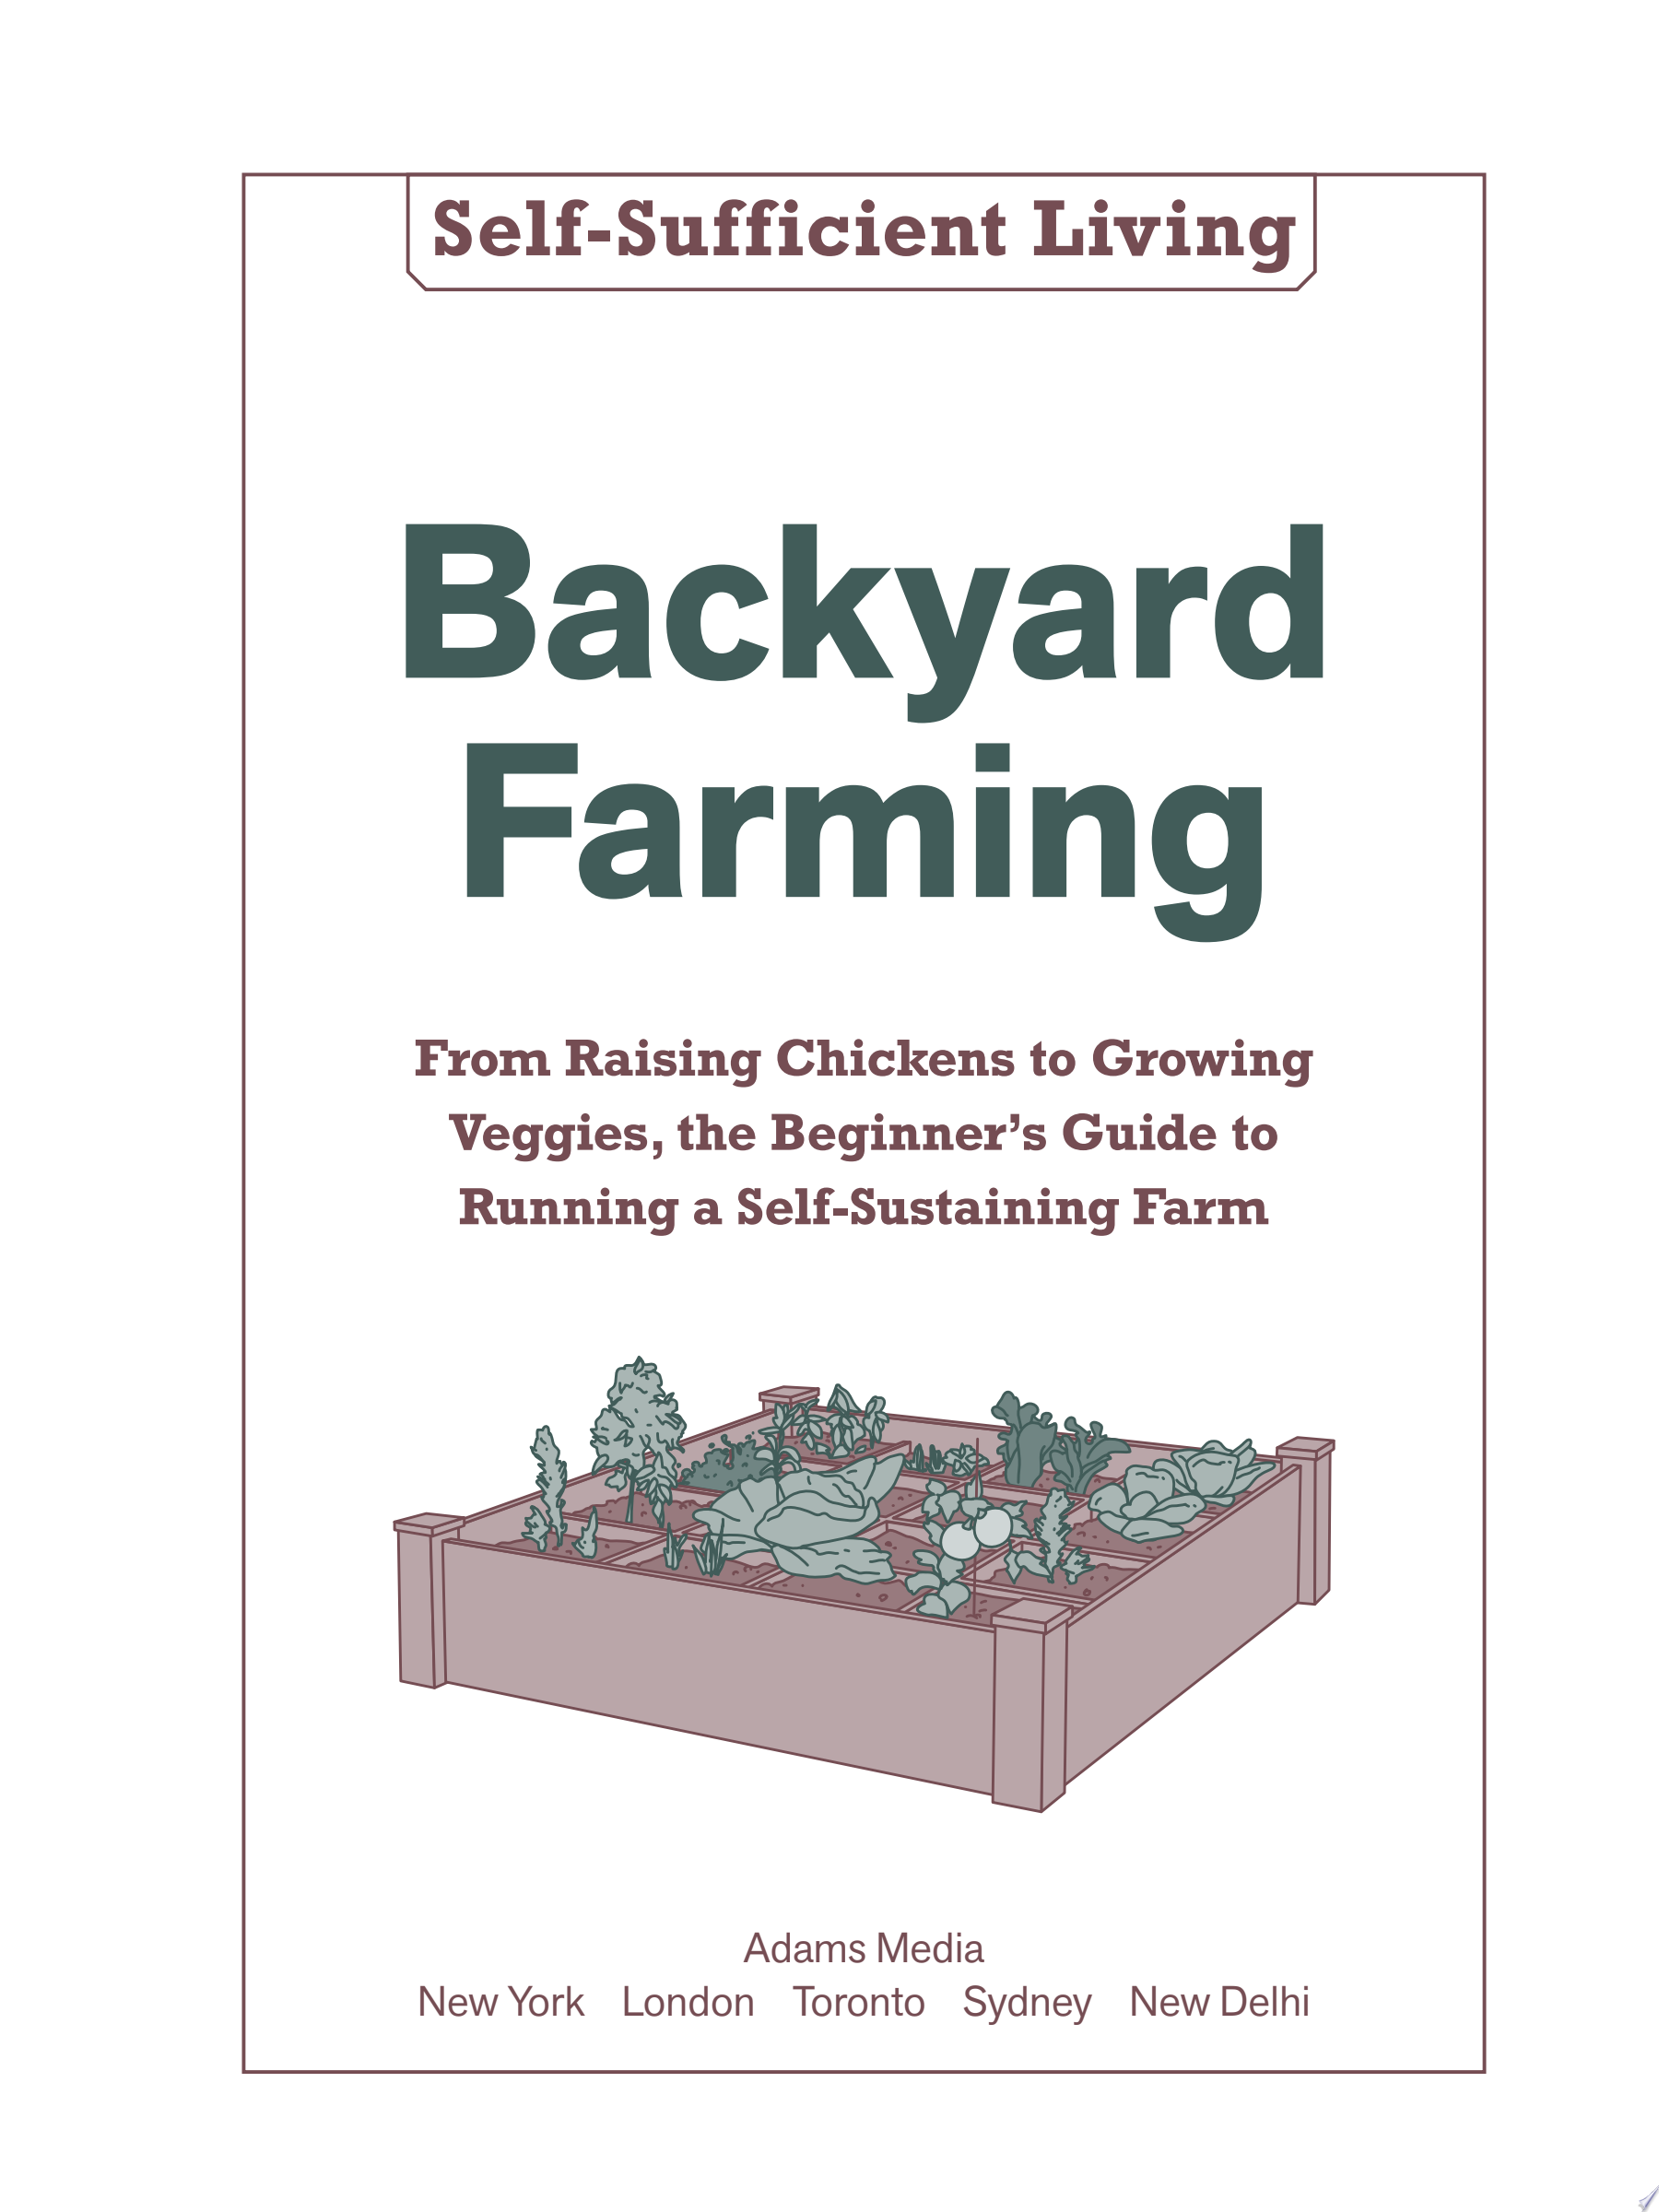 Image for "Backyard Farming"